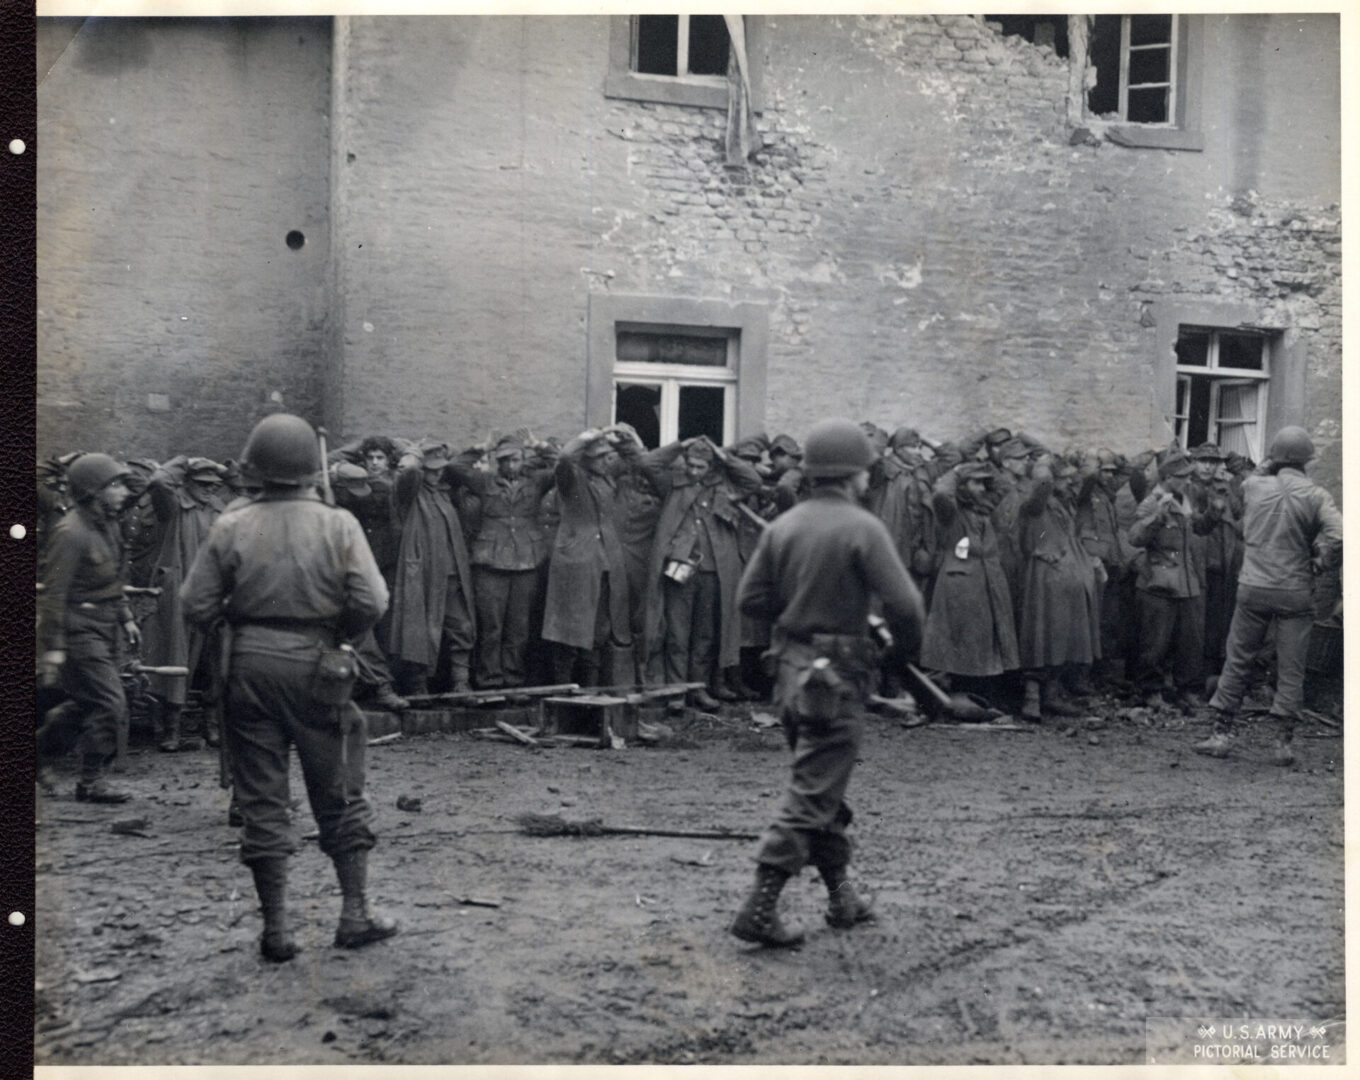 Infantrymen making their way towards Hurtgen Forest, Germany